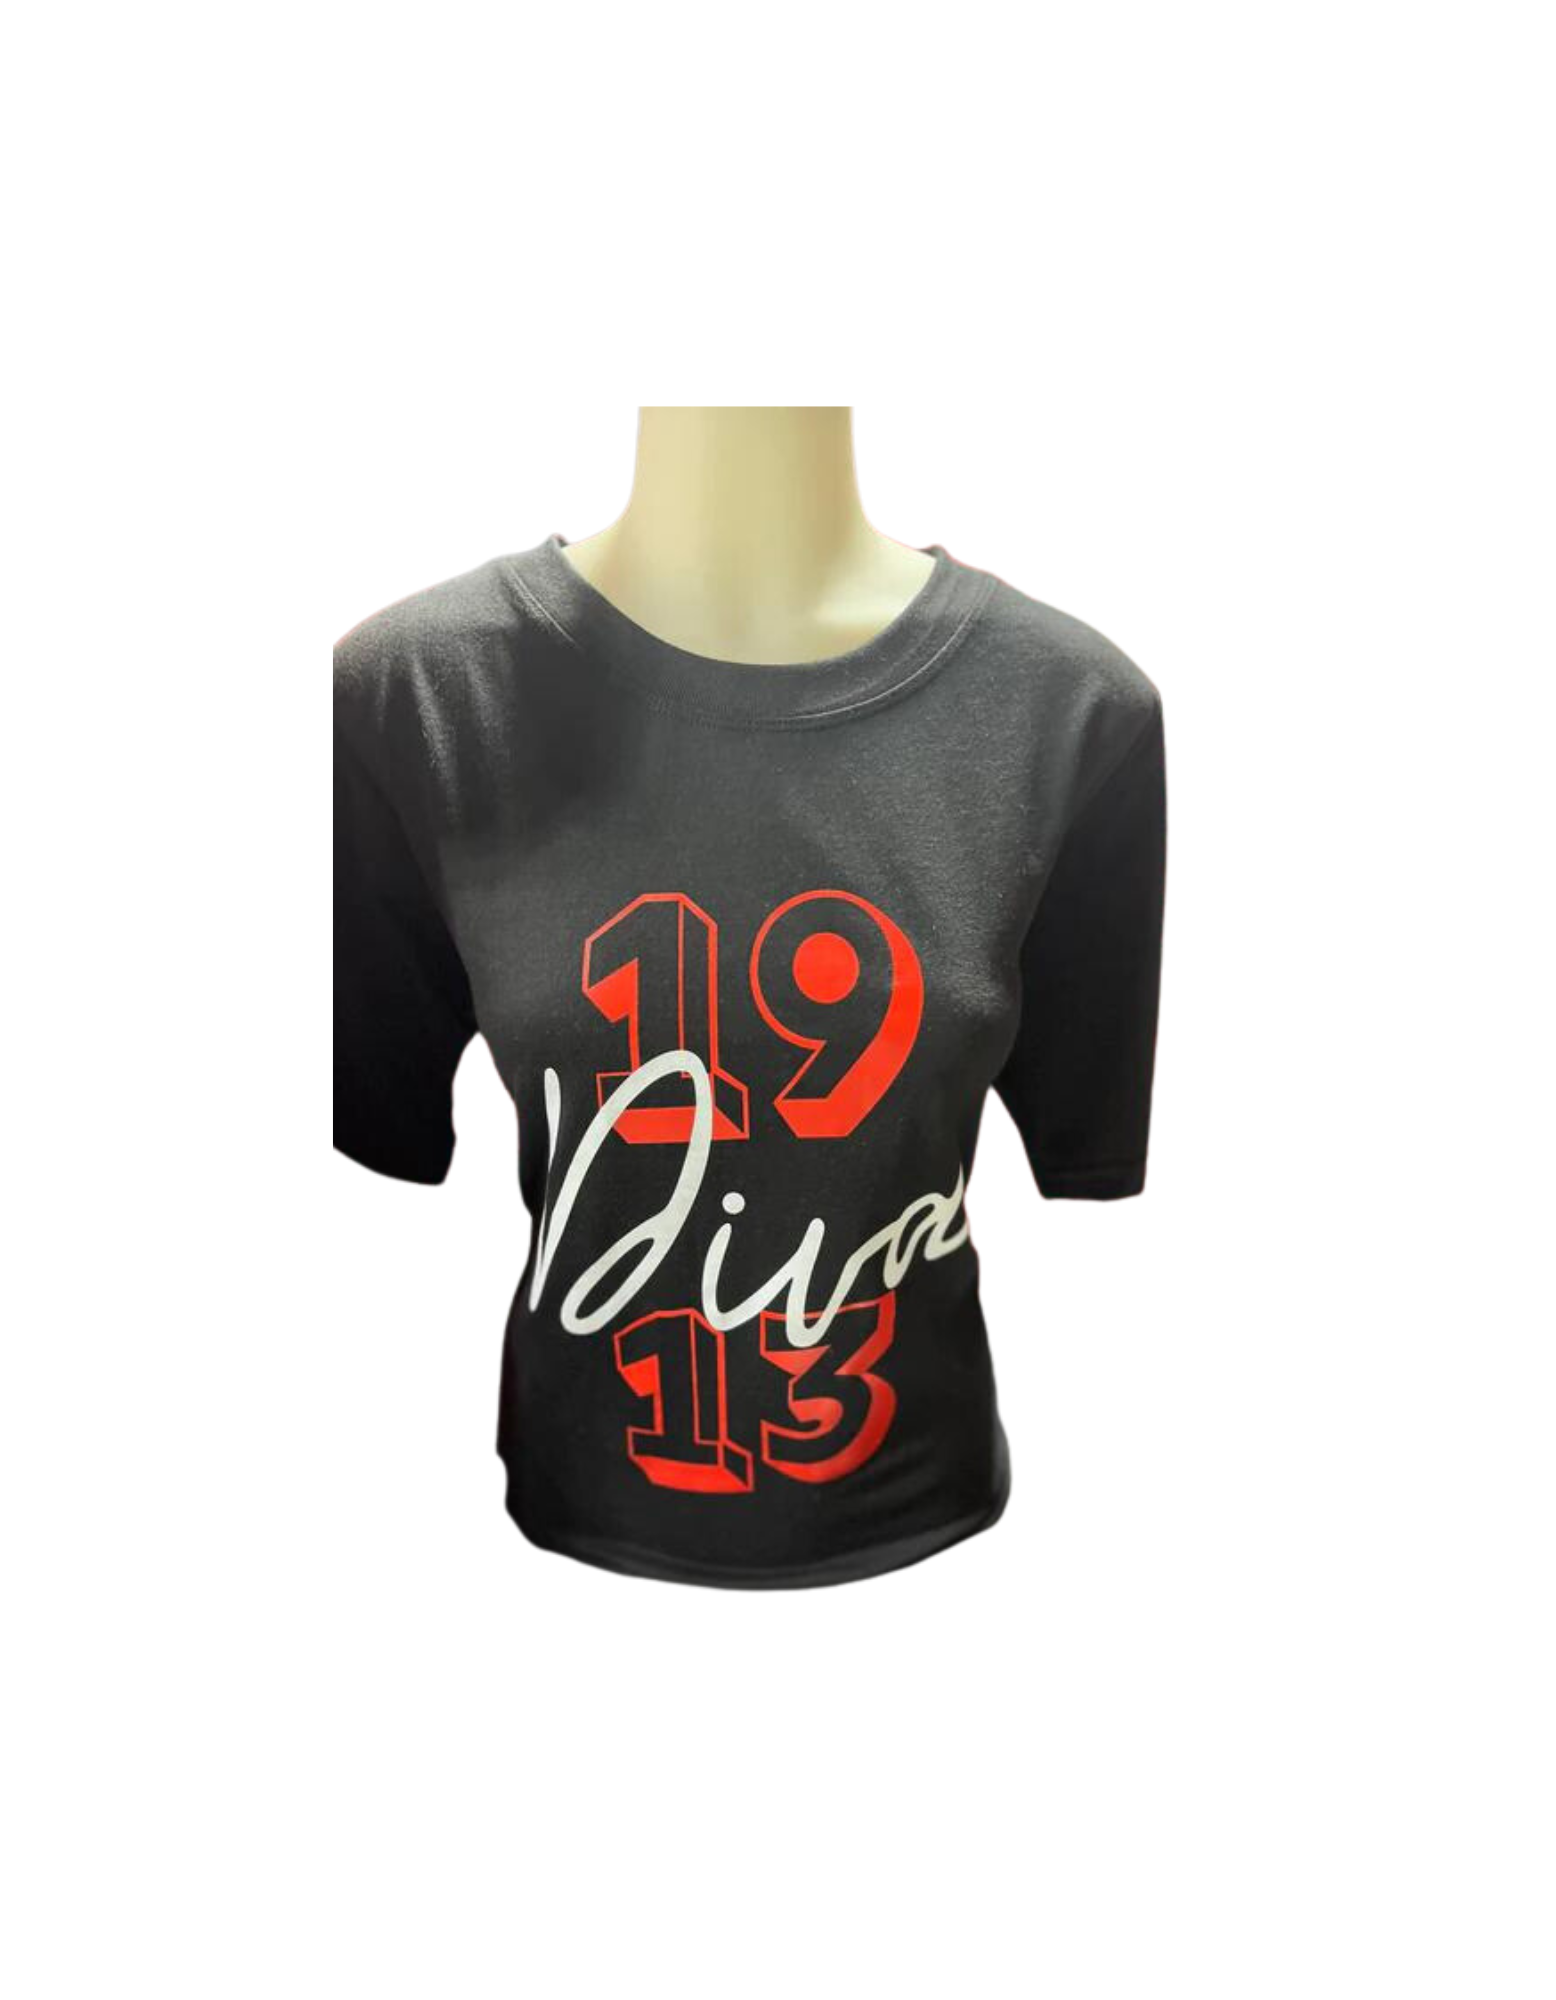 1913 Diva T-shirt